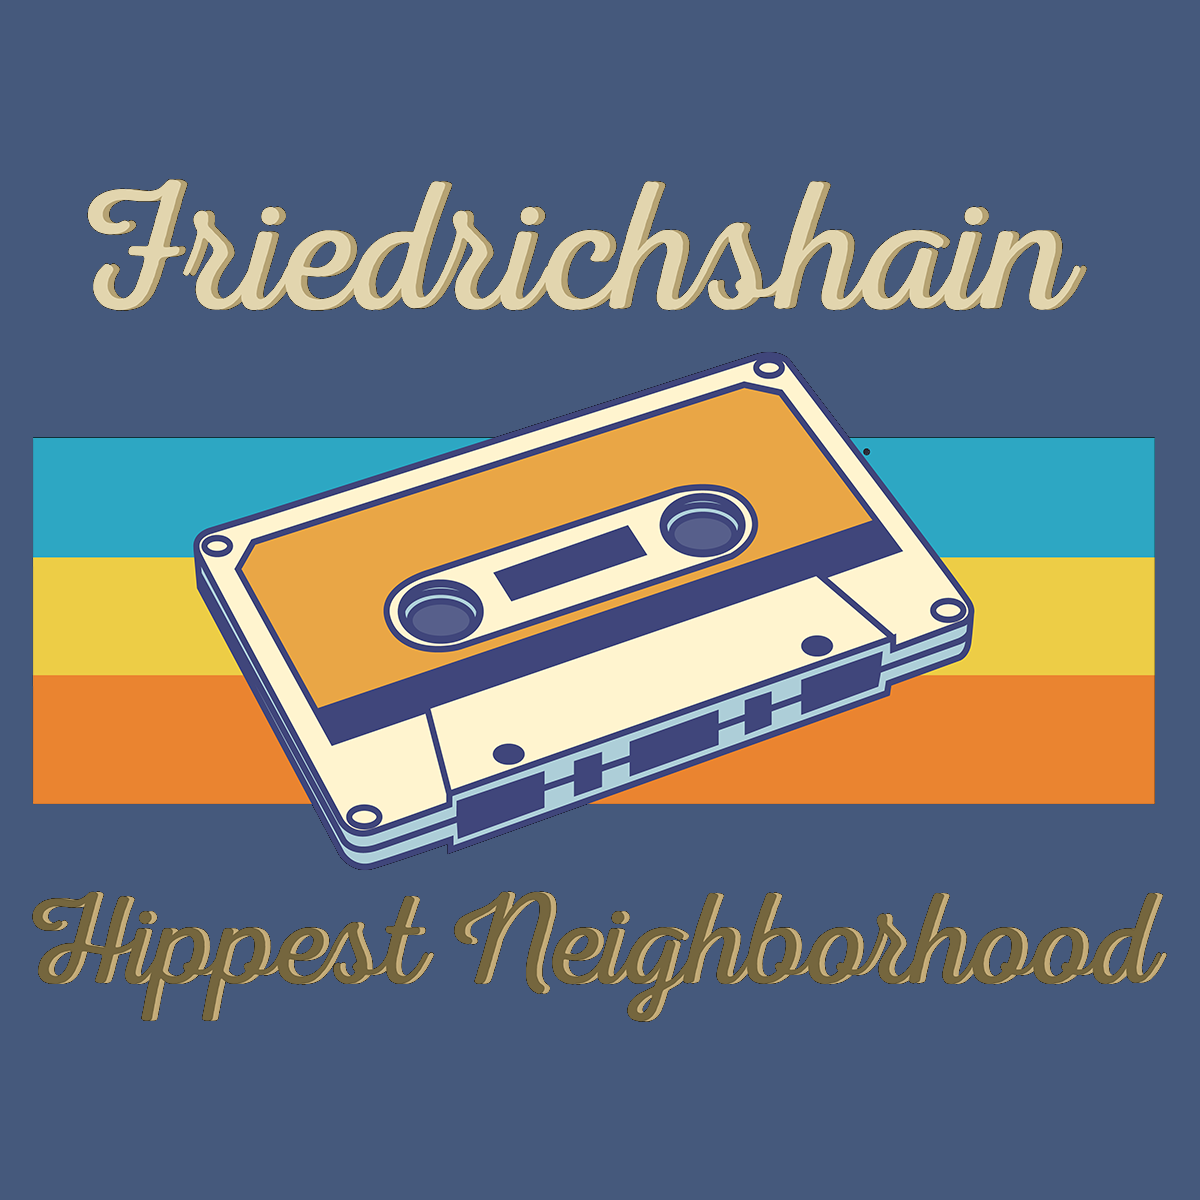 Friedrichshain Hippest Neighborhood